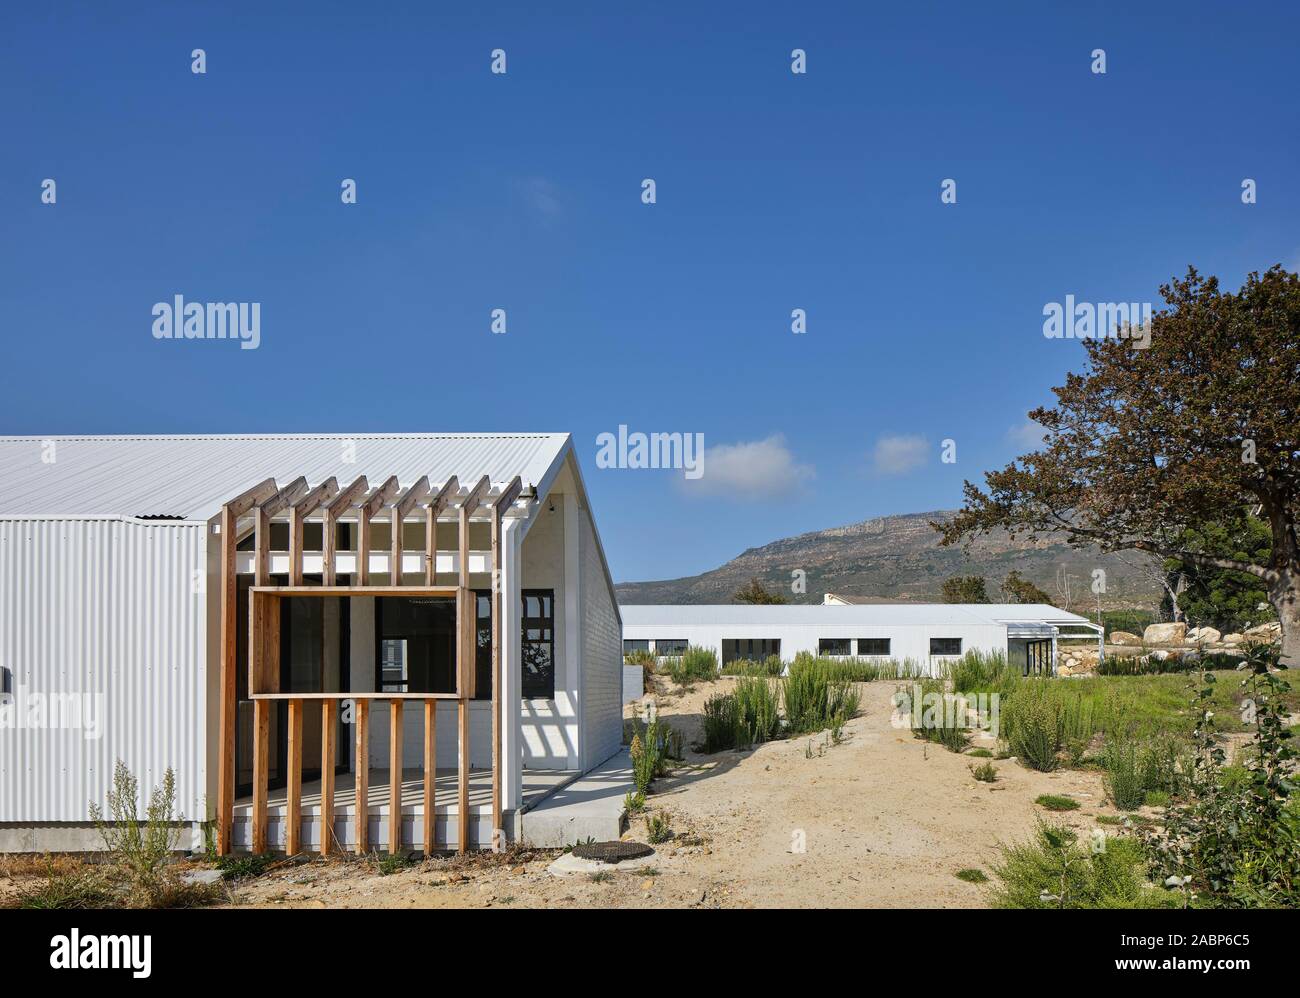 Obere und untere Volumes mit Büros. SAN Parks Tokai Büros Table Mountain National Park, Tokai, Südafrika. Architekt: Makeka Design Lab, 2 Stockfoto